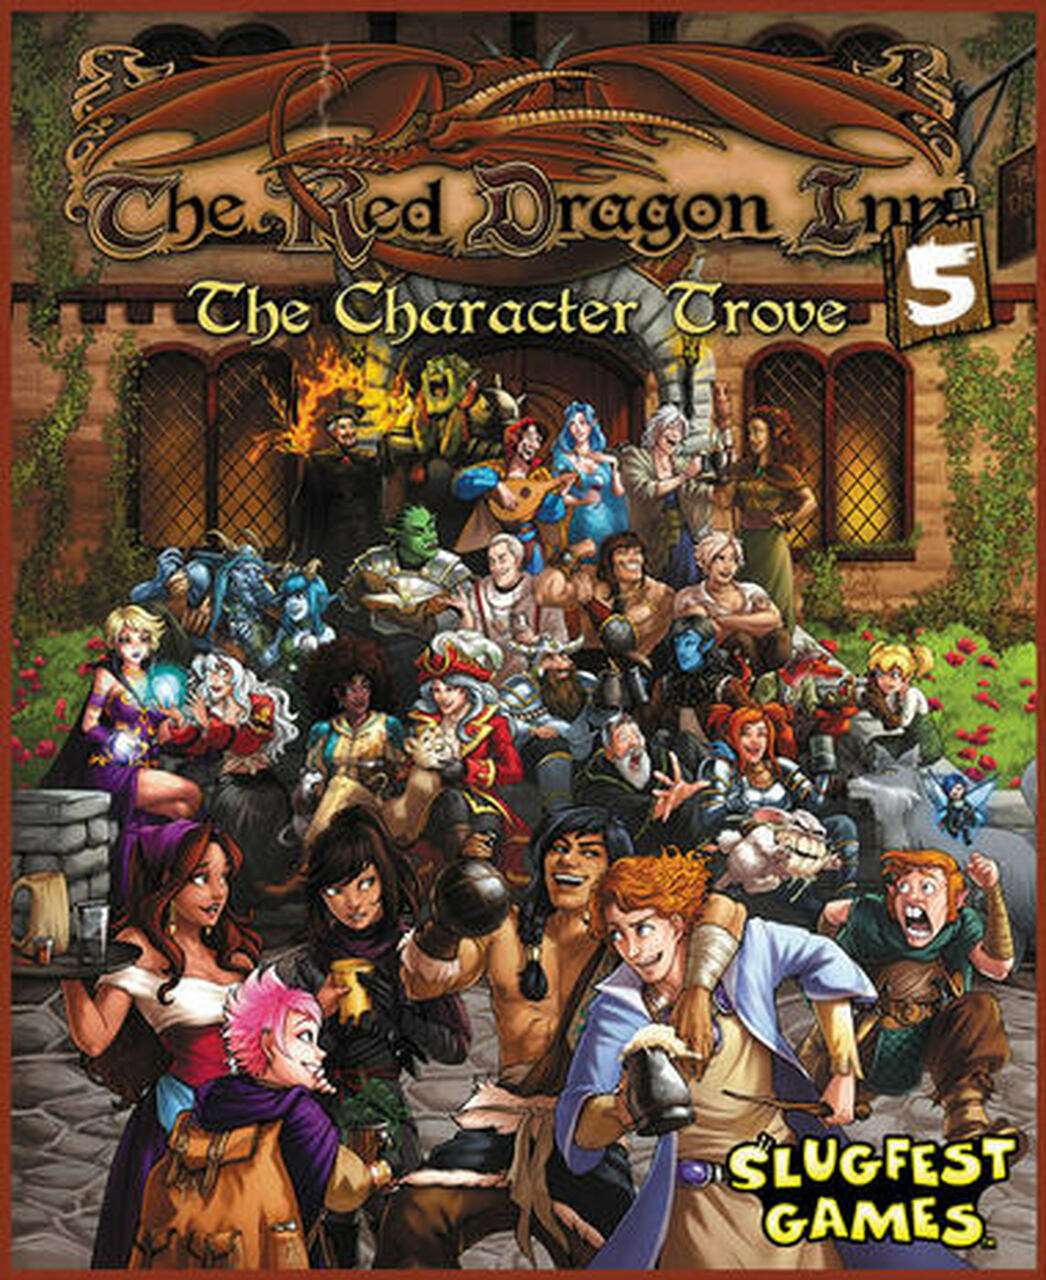 The Red Dragon Inn 5: The Character Trove, SlugFest Games, Board Game, red-dragon-inn-5-the-character-trove, , Dark Ninja Gaming LA